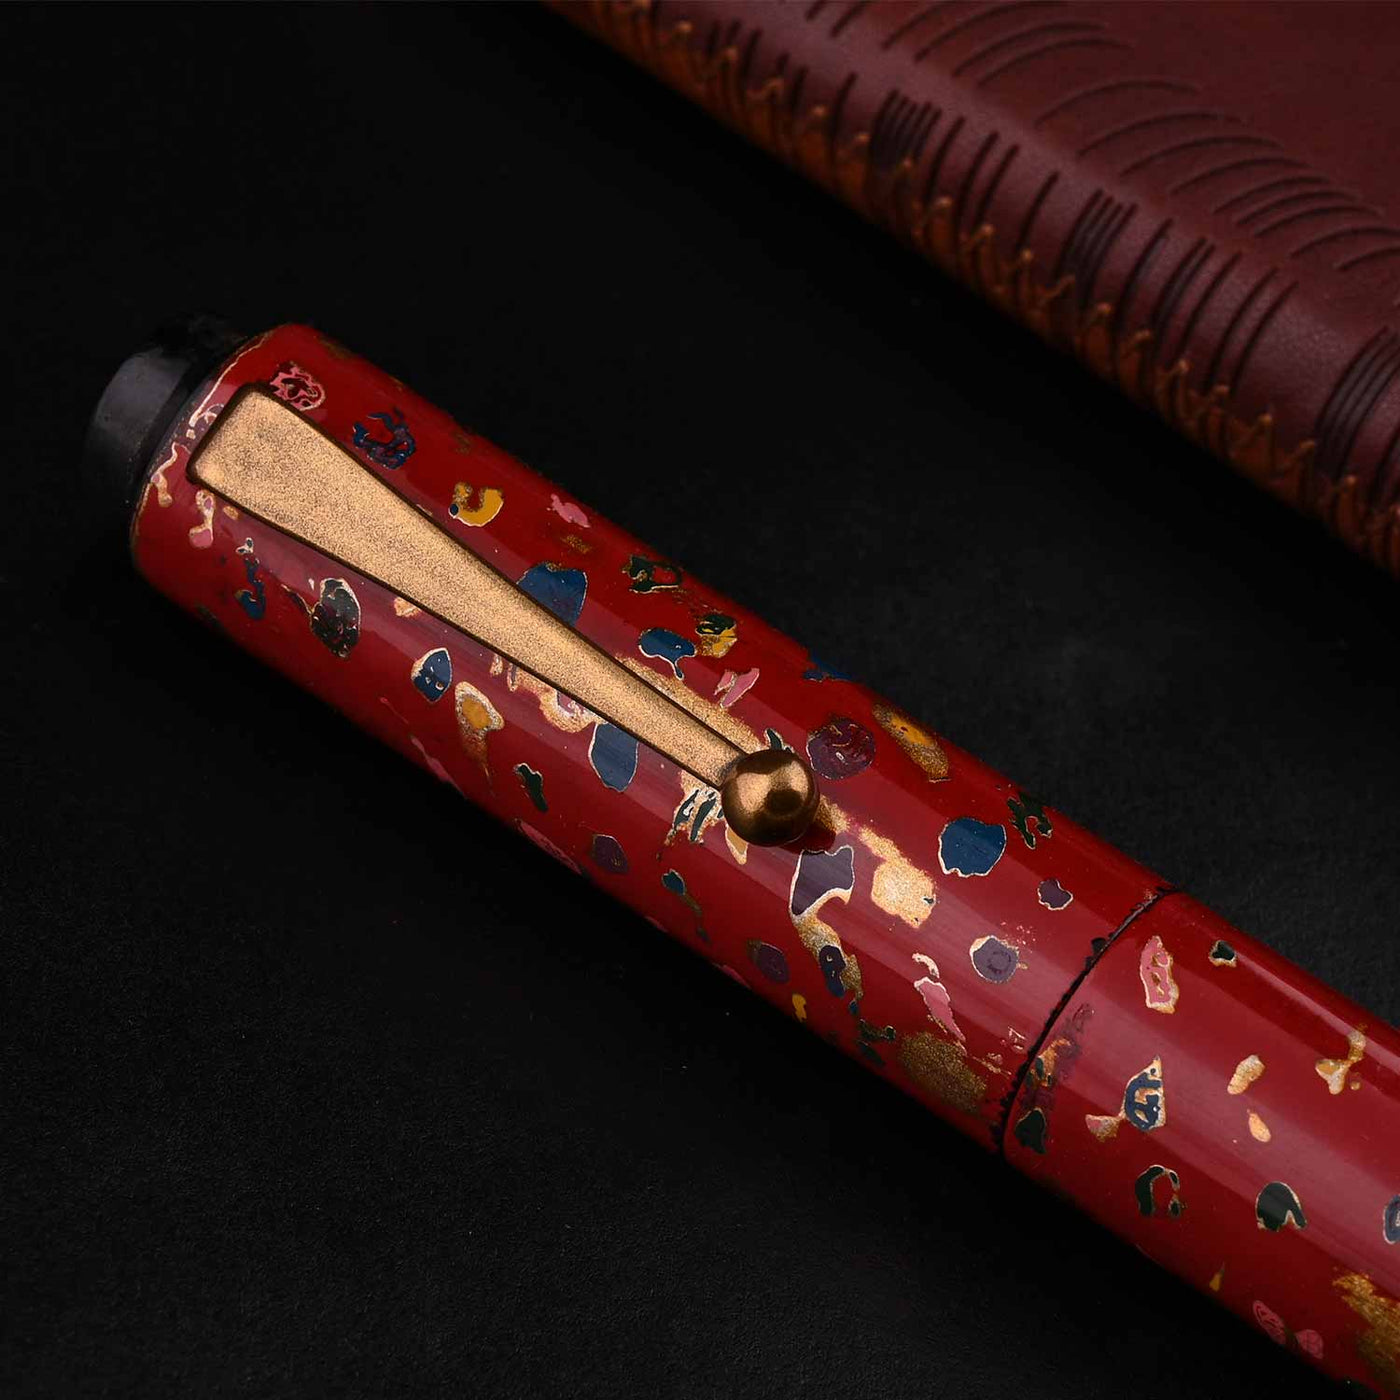 AP Magical Nuri Limited Edition Fountain Pen Red 18K Gold Nib 6